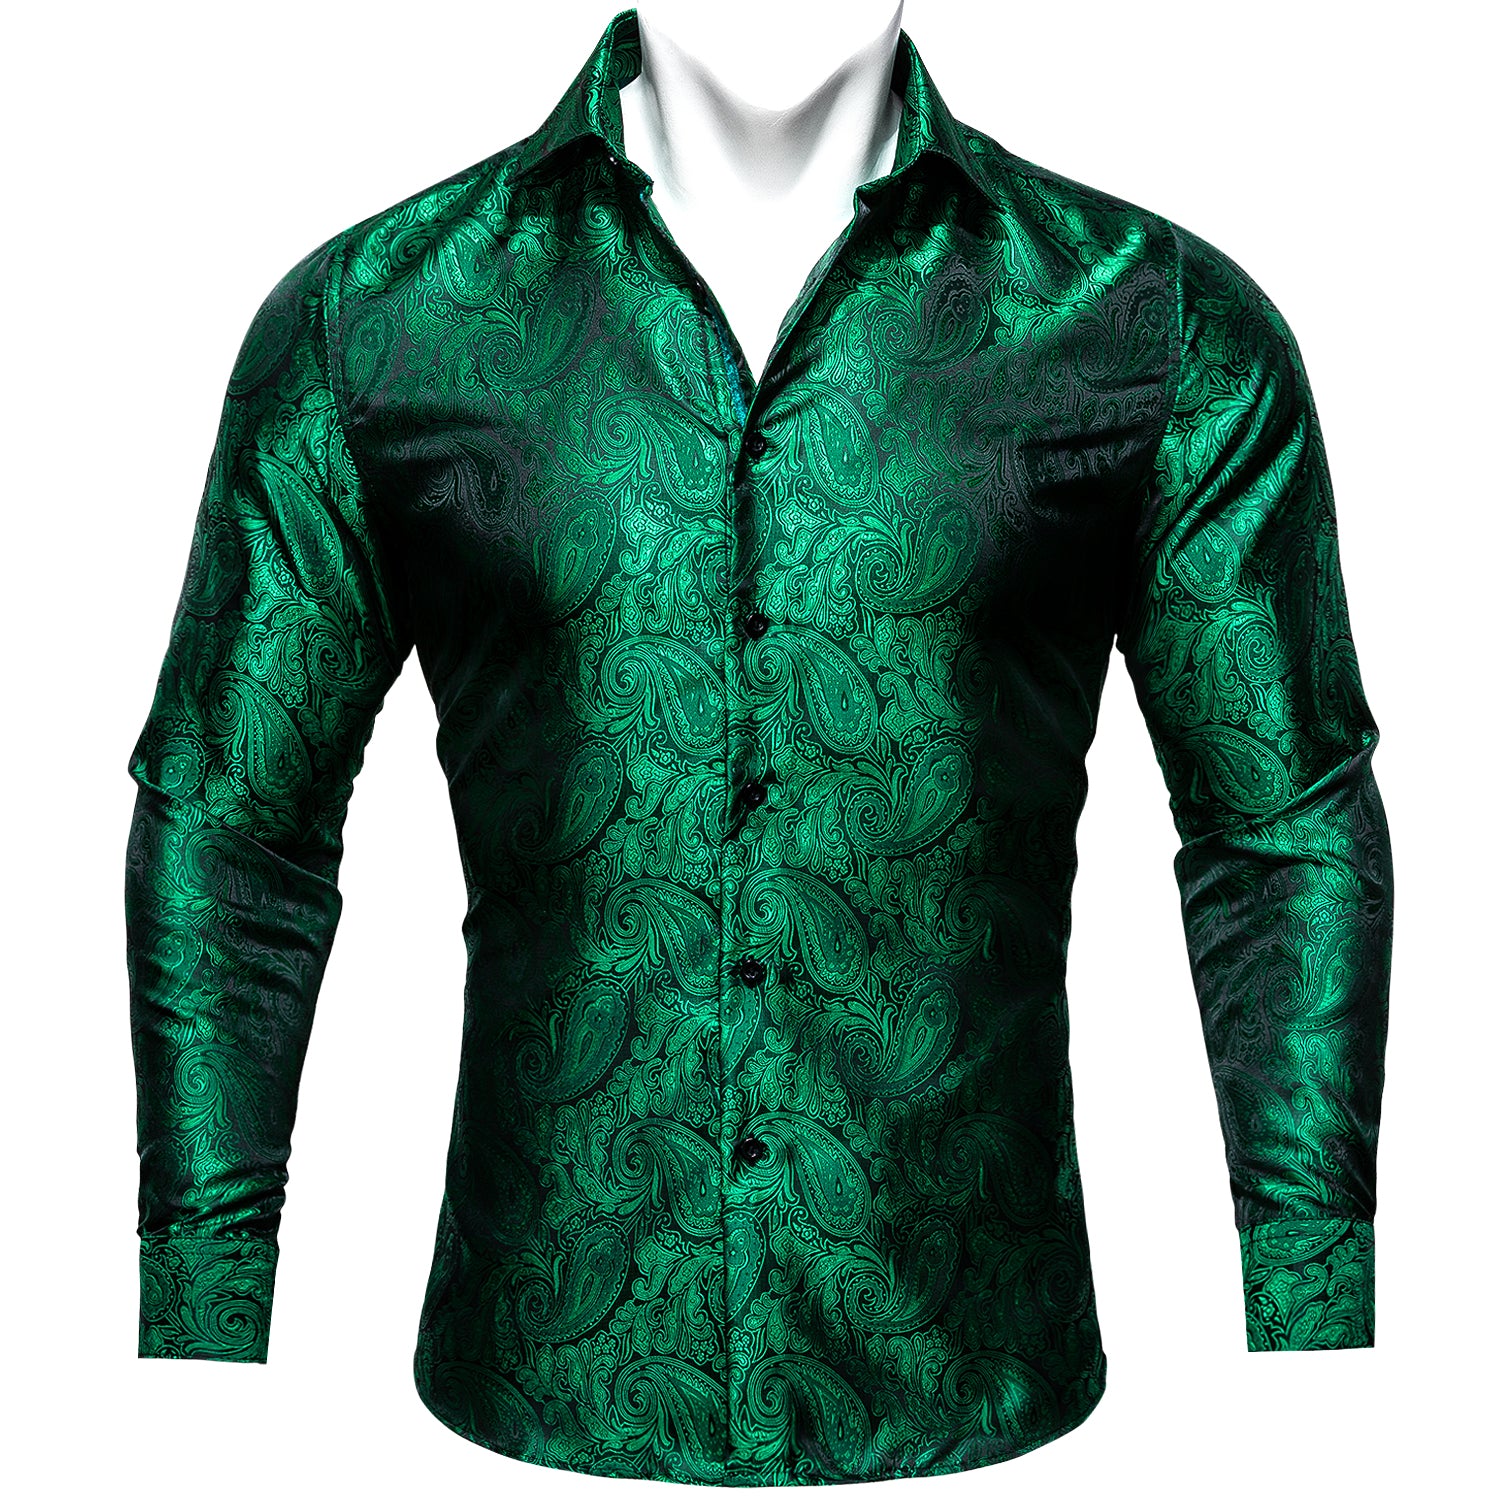 Barry.wang Green Paisley Silk Shirt